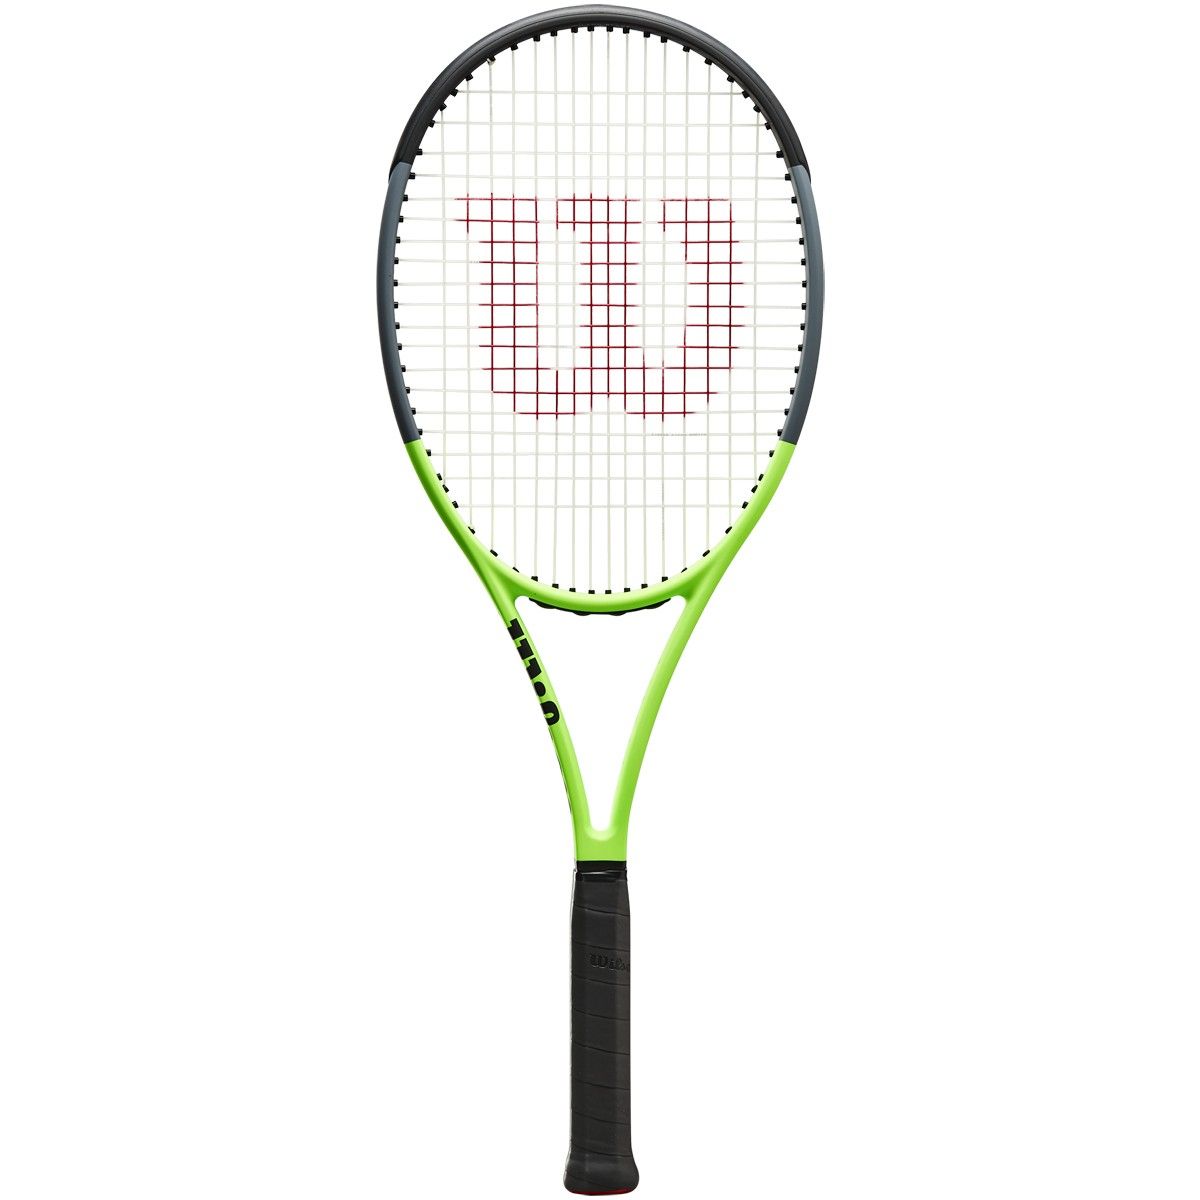 Geaccepteerd strottenhoofd probleem Wilson Blade 98 (16x19) V7.0 Reverse Tennis Racquet WR013621